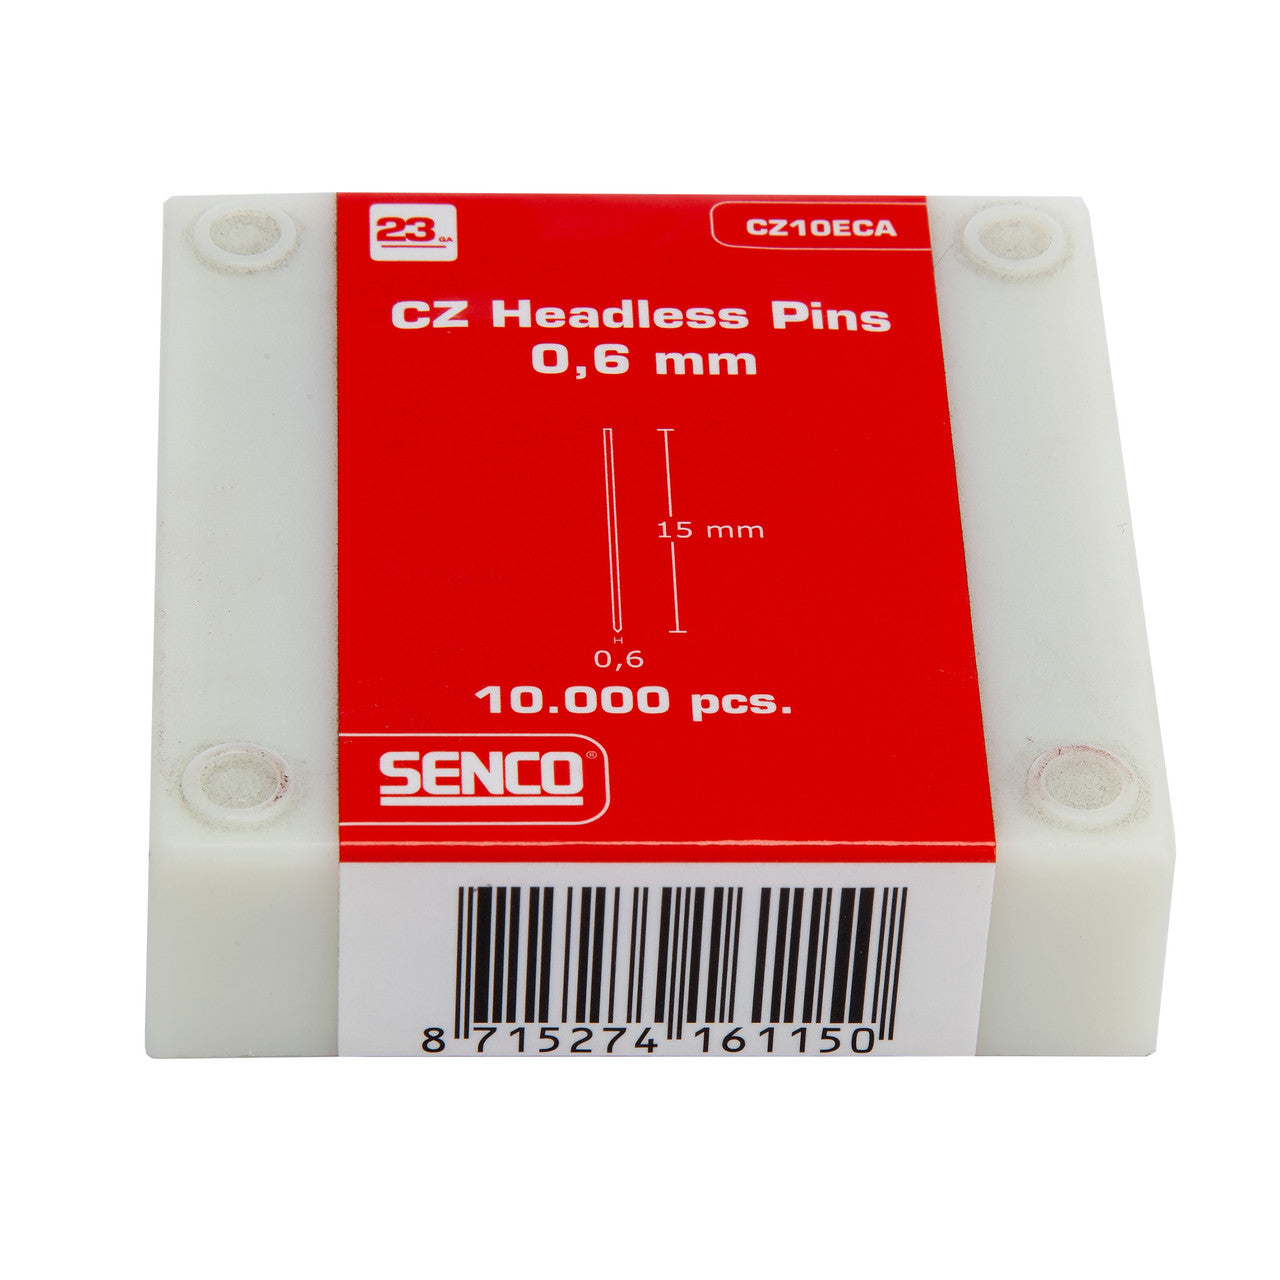 Senco CZ10ECA Galvanised Collated CZ Headless Pins 23 Gauge 0.6mm x 15mm (10,000 in Box)